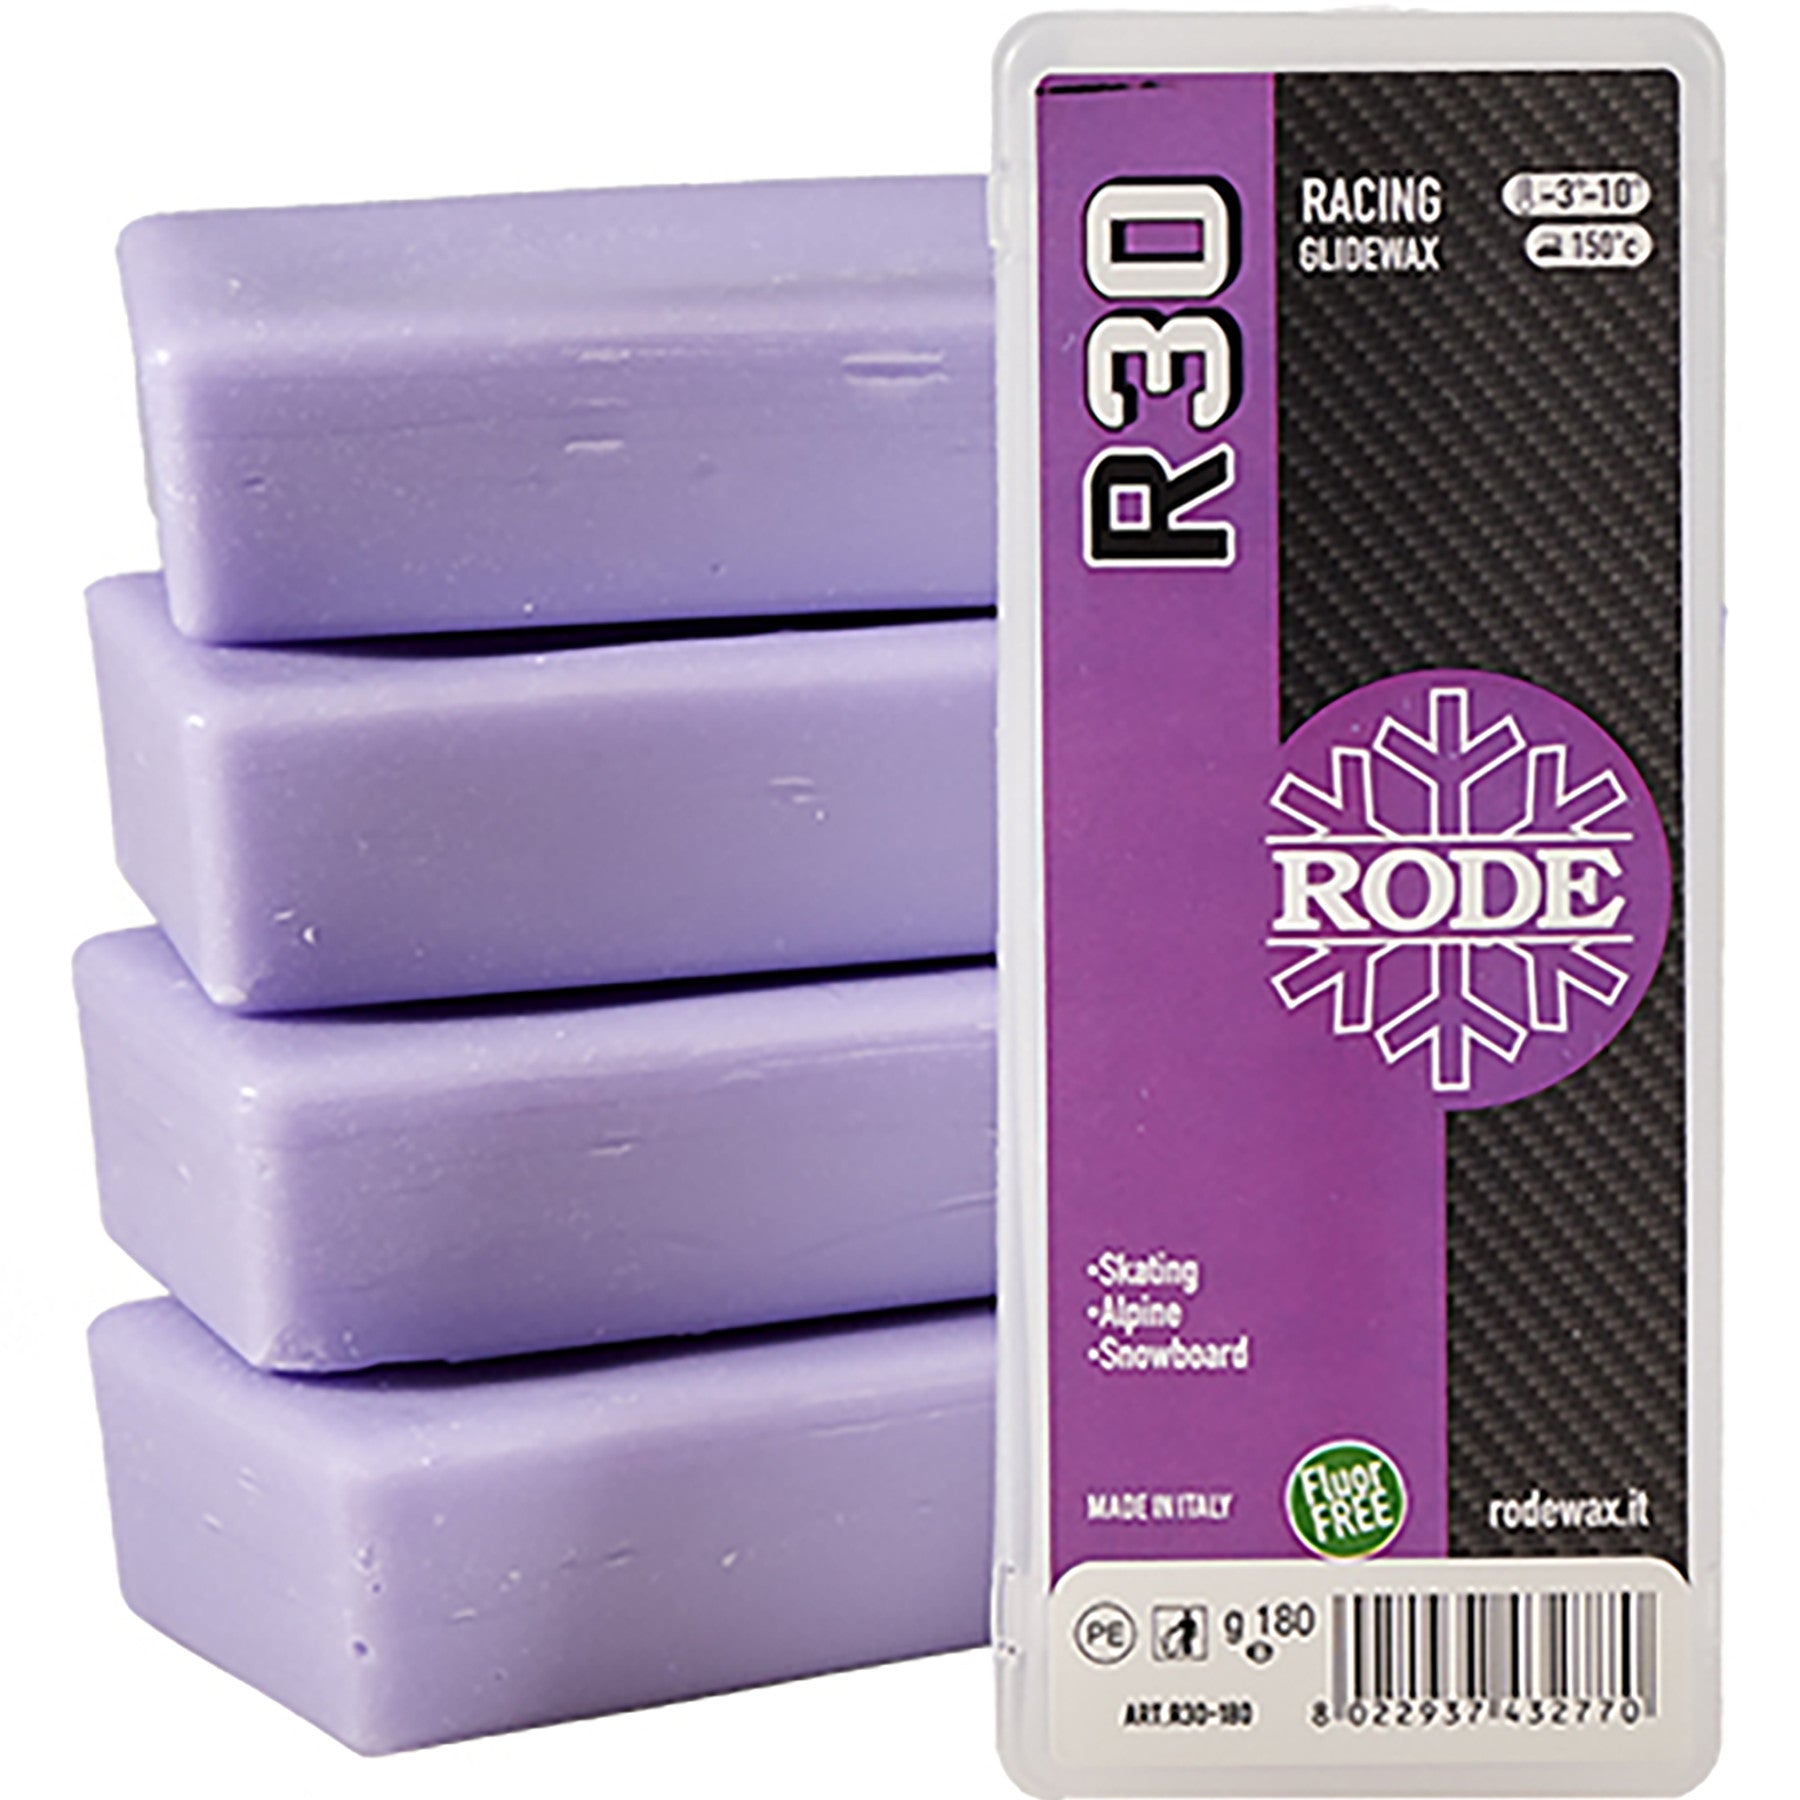 Buy r30-violet-3-10-c Rode Racing Glide Wax 900g